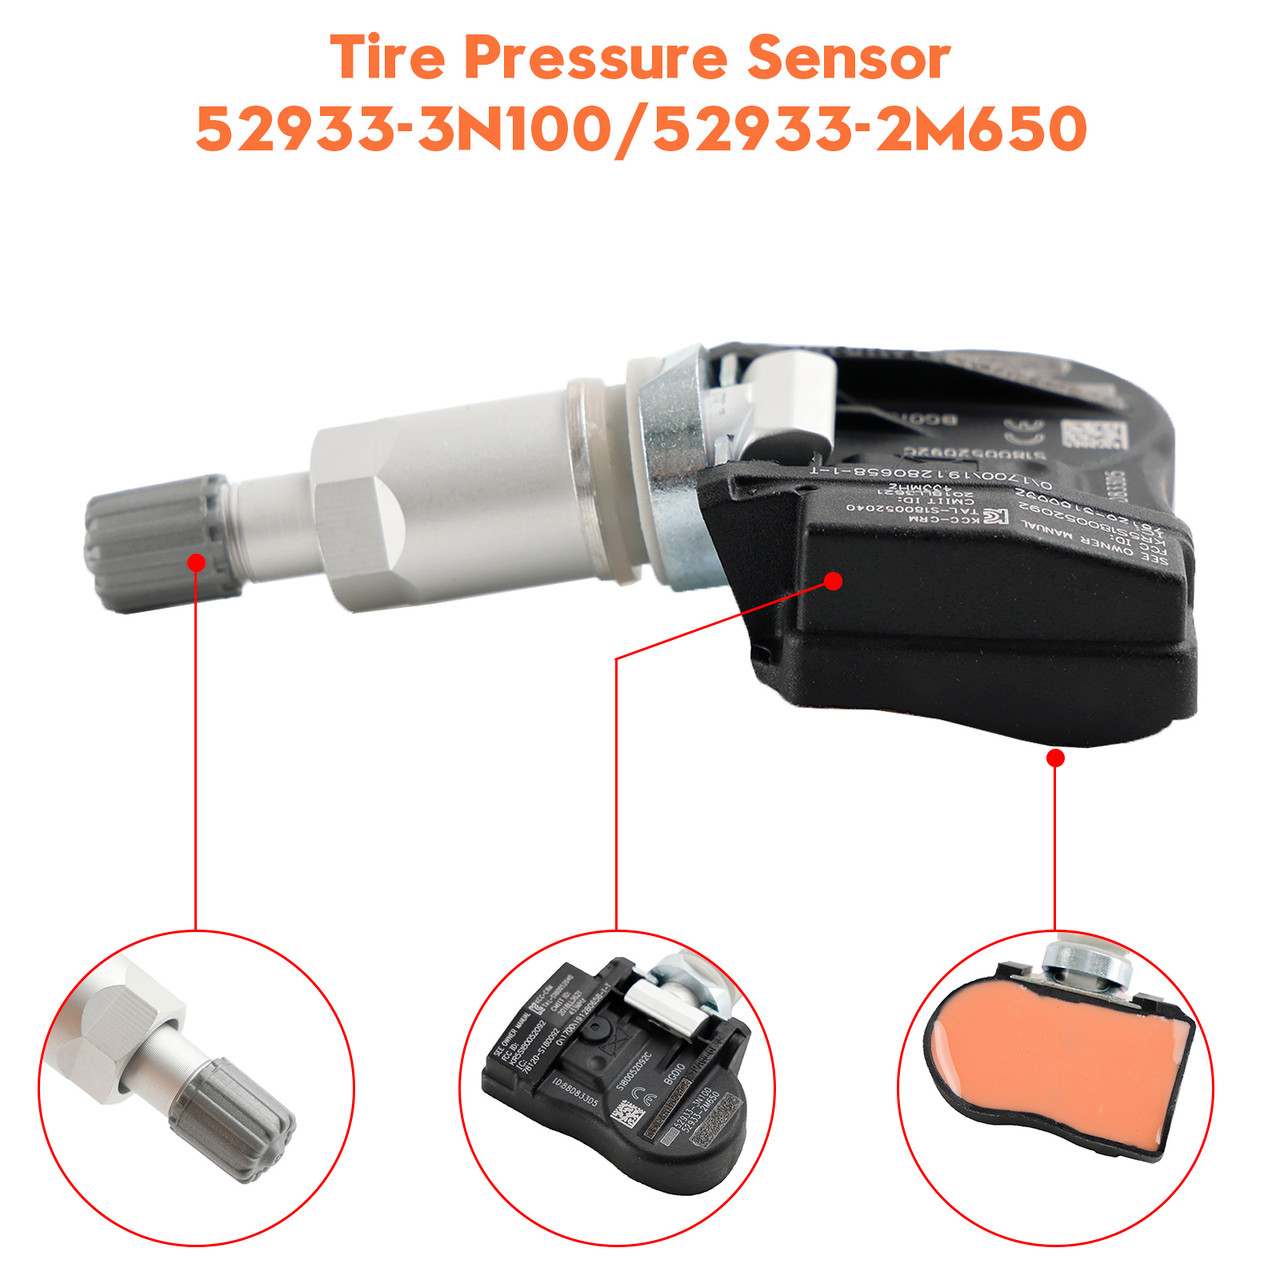 TPMS Tire Pressure Sensor 52933-3N100 For Kia Ceed Hyundai Accent Genesis